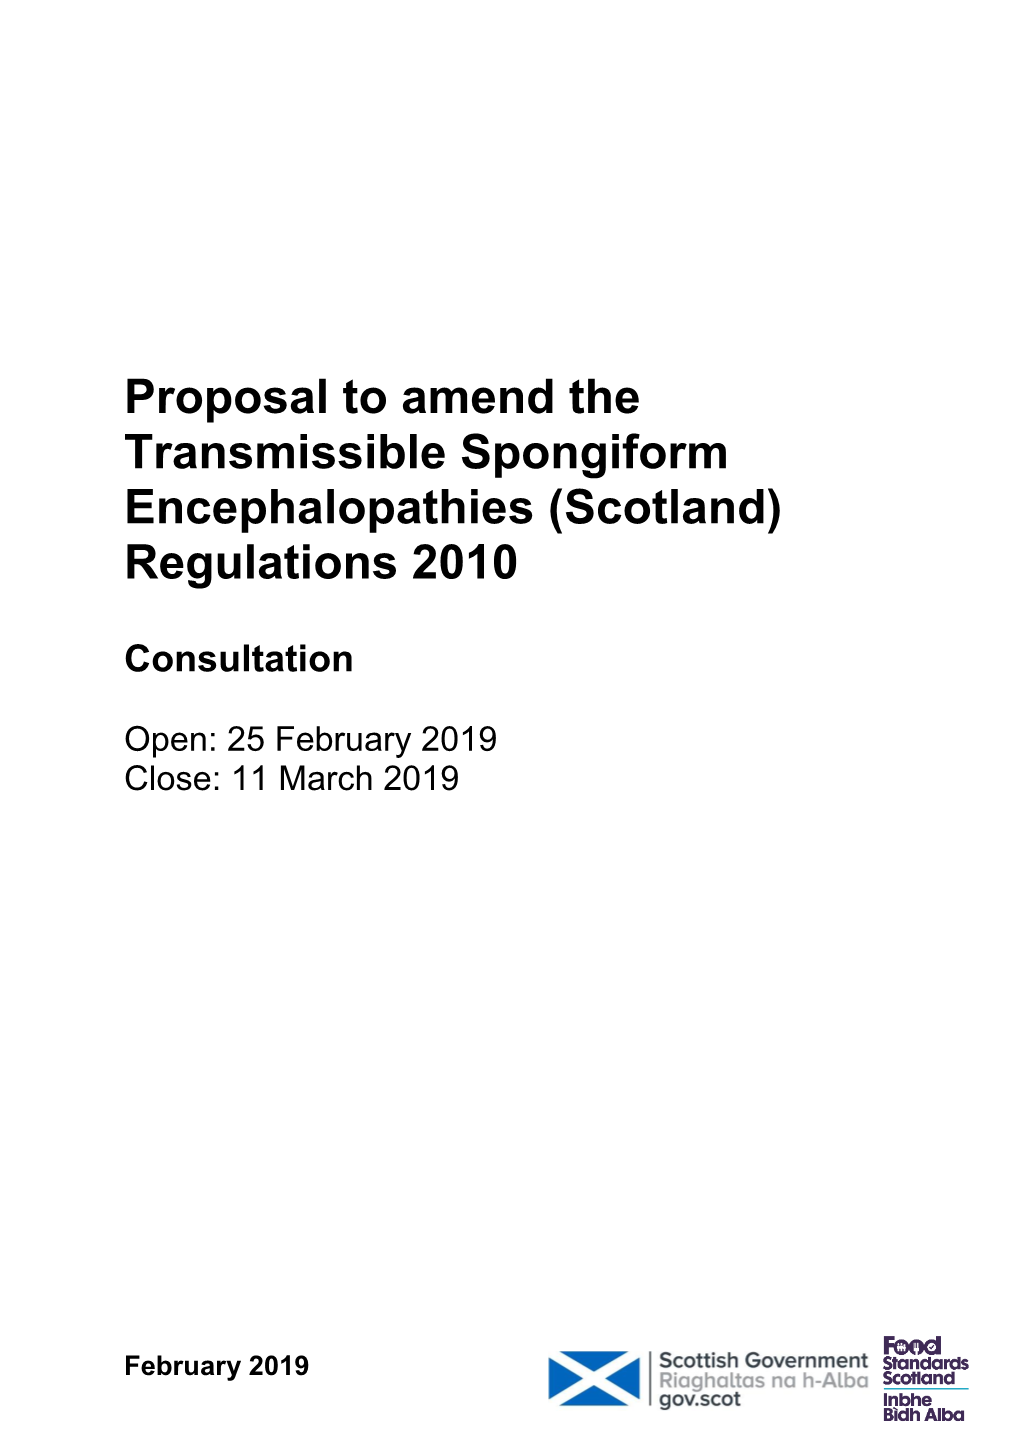 Proposal to Amend the Transmissible Spongiform Encephalopathies (Scotland) Regulations 2010